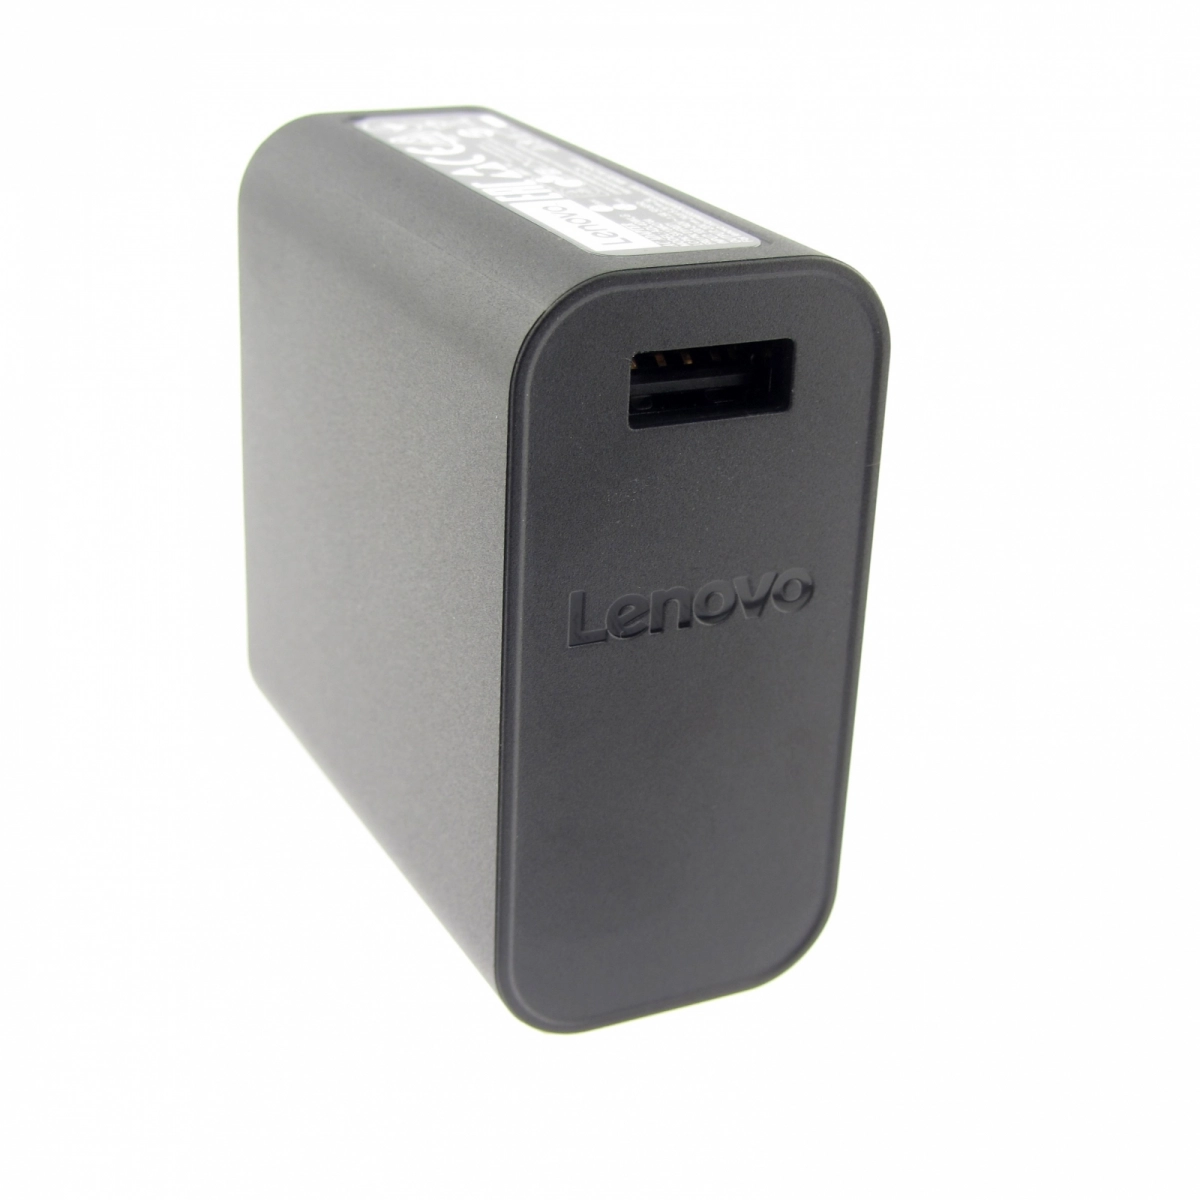 Original Netzteil für LENOVO Delta ADL40WDC, 20V, 2A, Stecker USB, ohne USB-Kabel